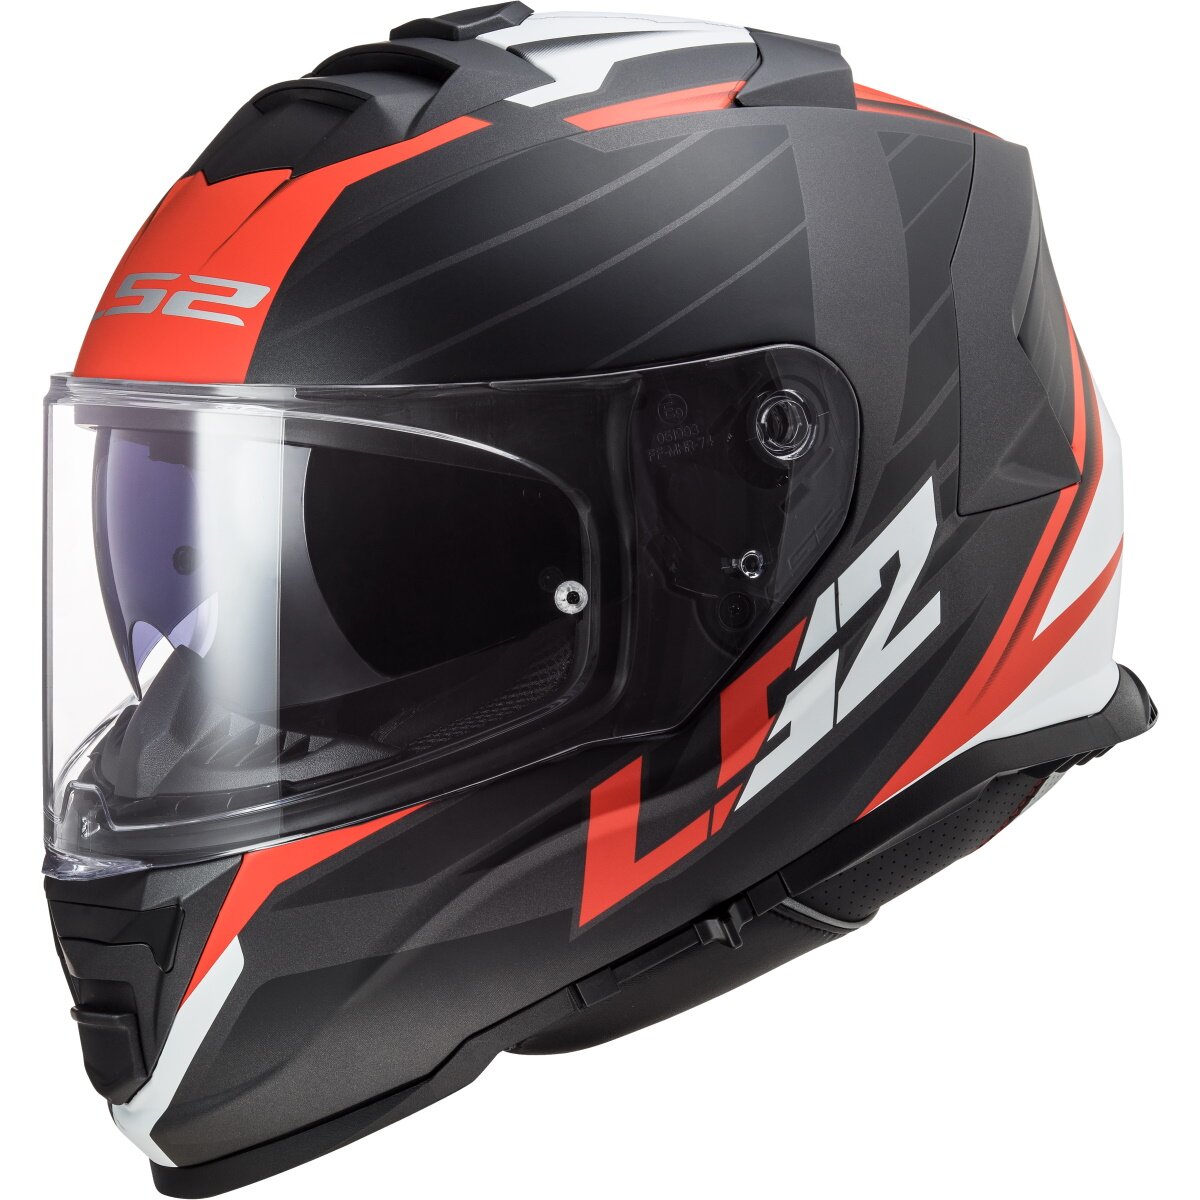 mo, 151,20 Nerve | red € Storm FF800 matt-black full-face LS2 / helmet